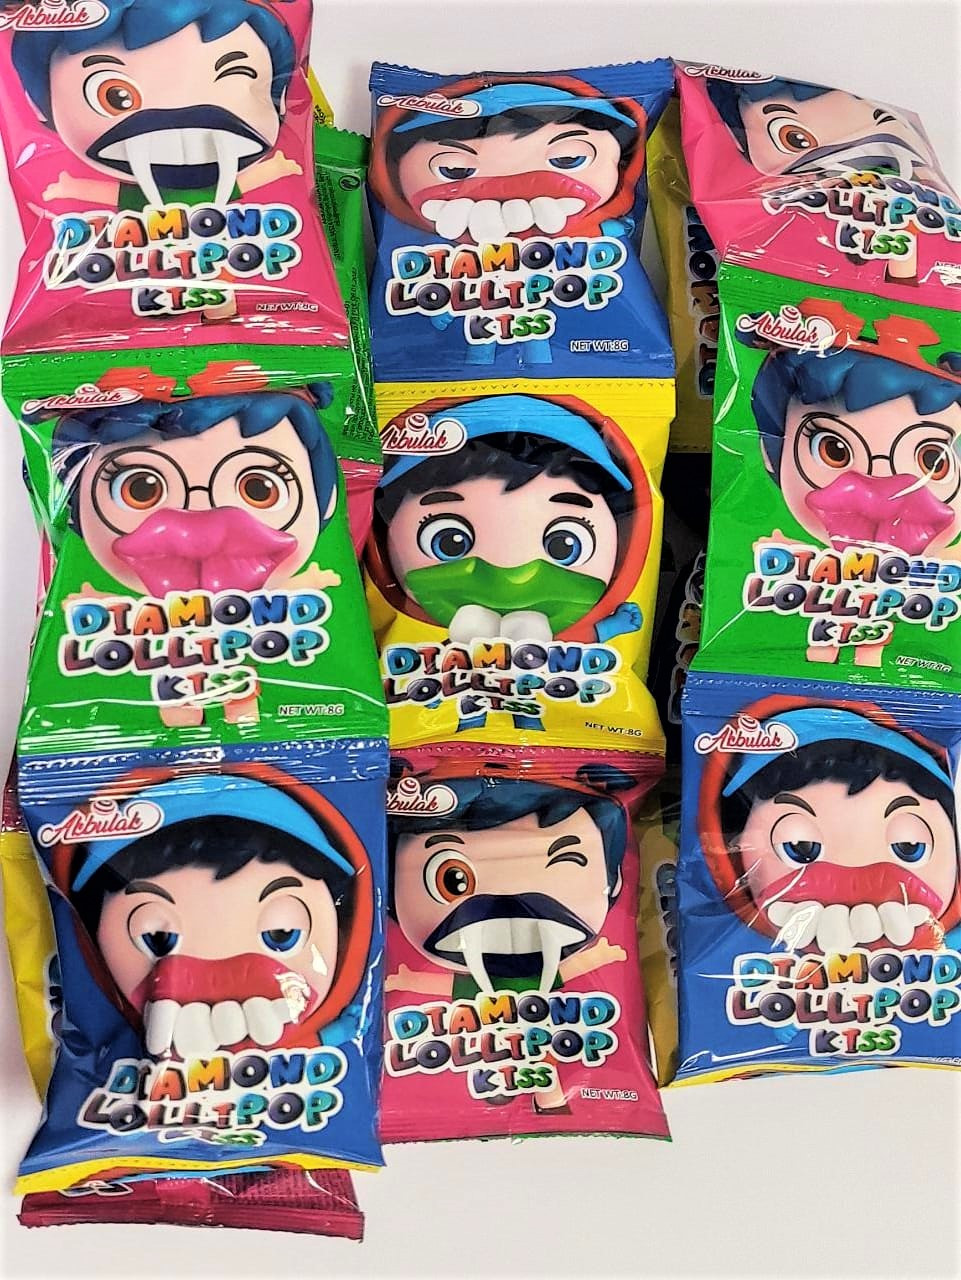 Леденец Соска Поцелуйчик Diamond lollipop kiss 8 гр (30 шт в упаковке)